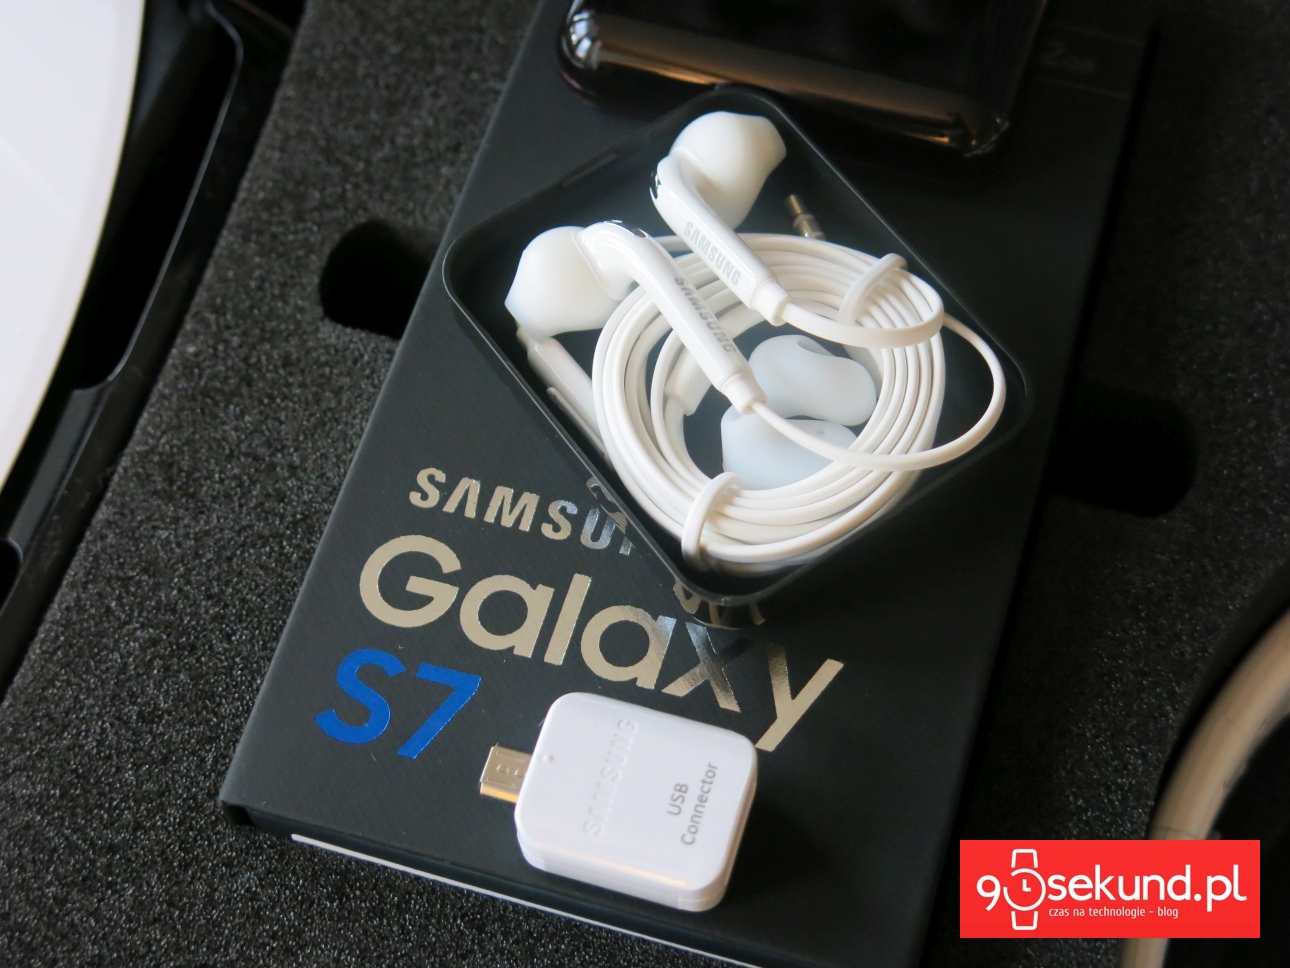 Samsung Galaxy S7 SM-G930 plus USB Connector i słuchawki - recenzja 90sekund.pl